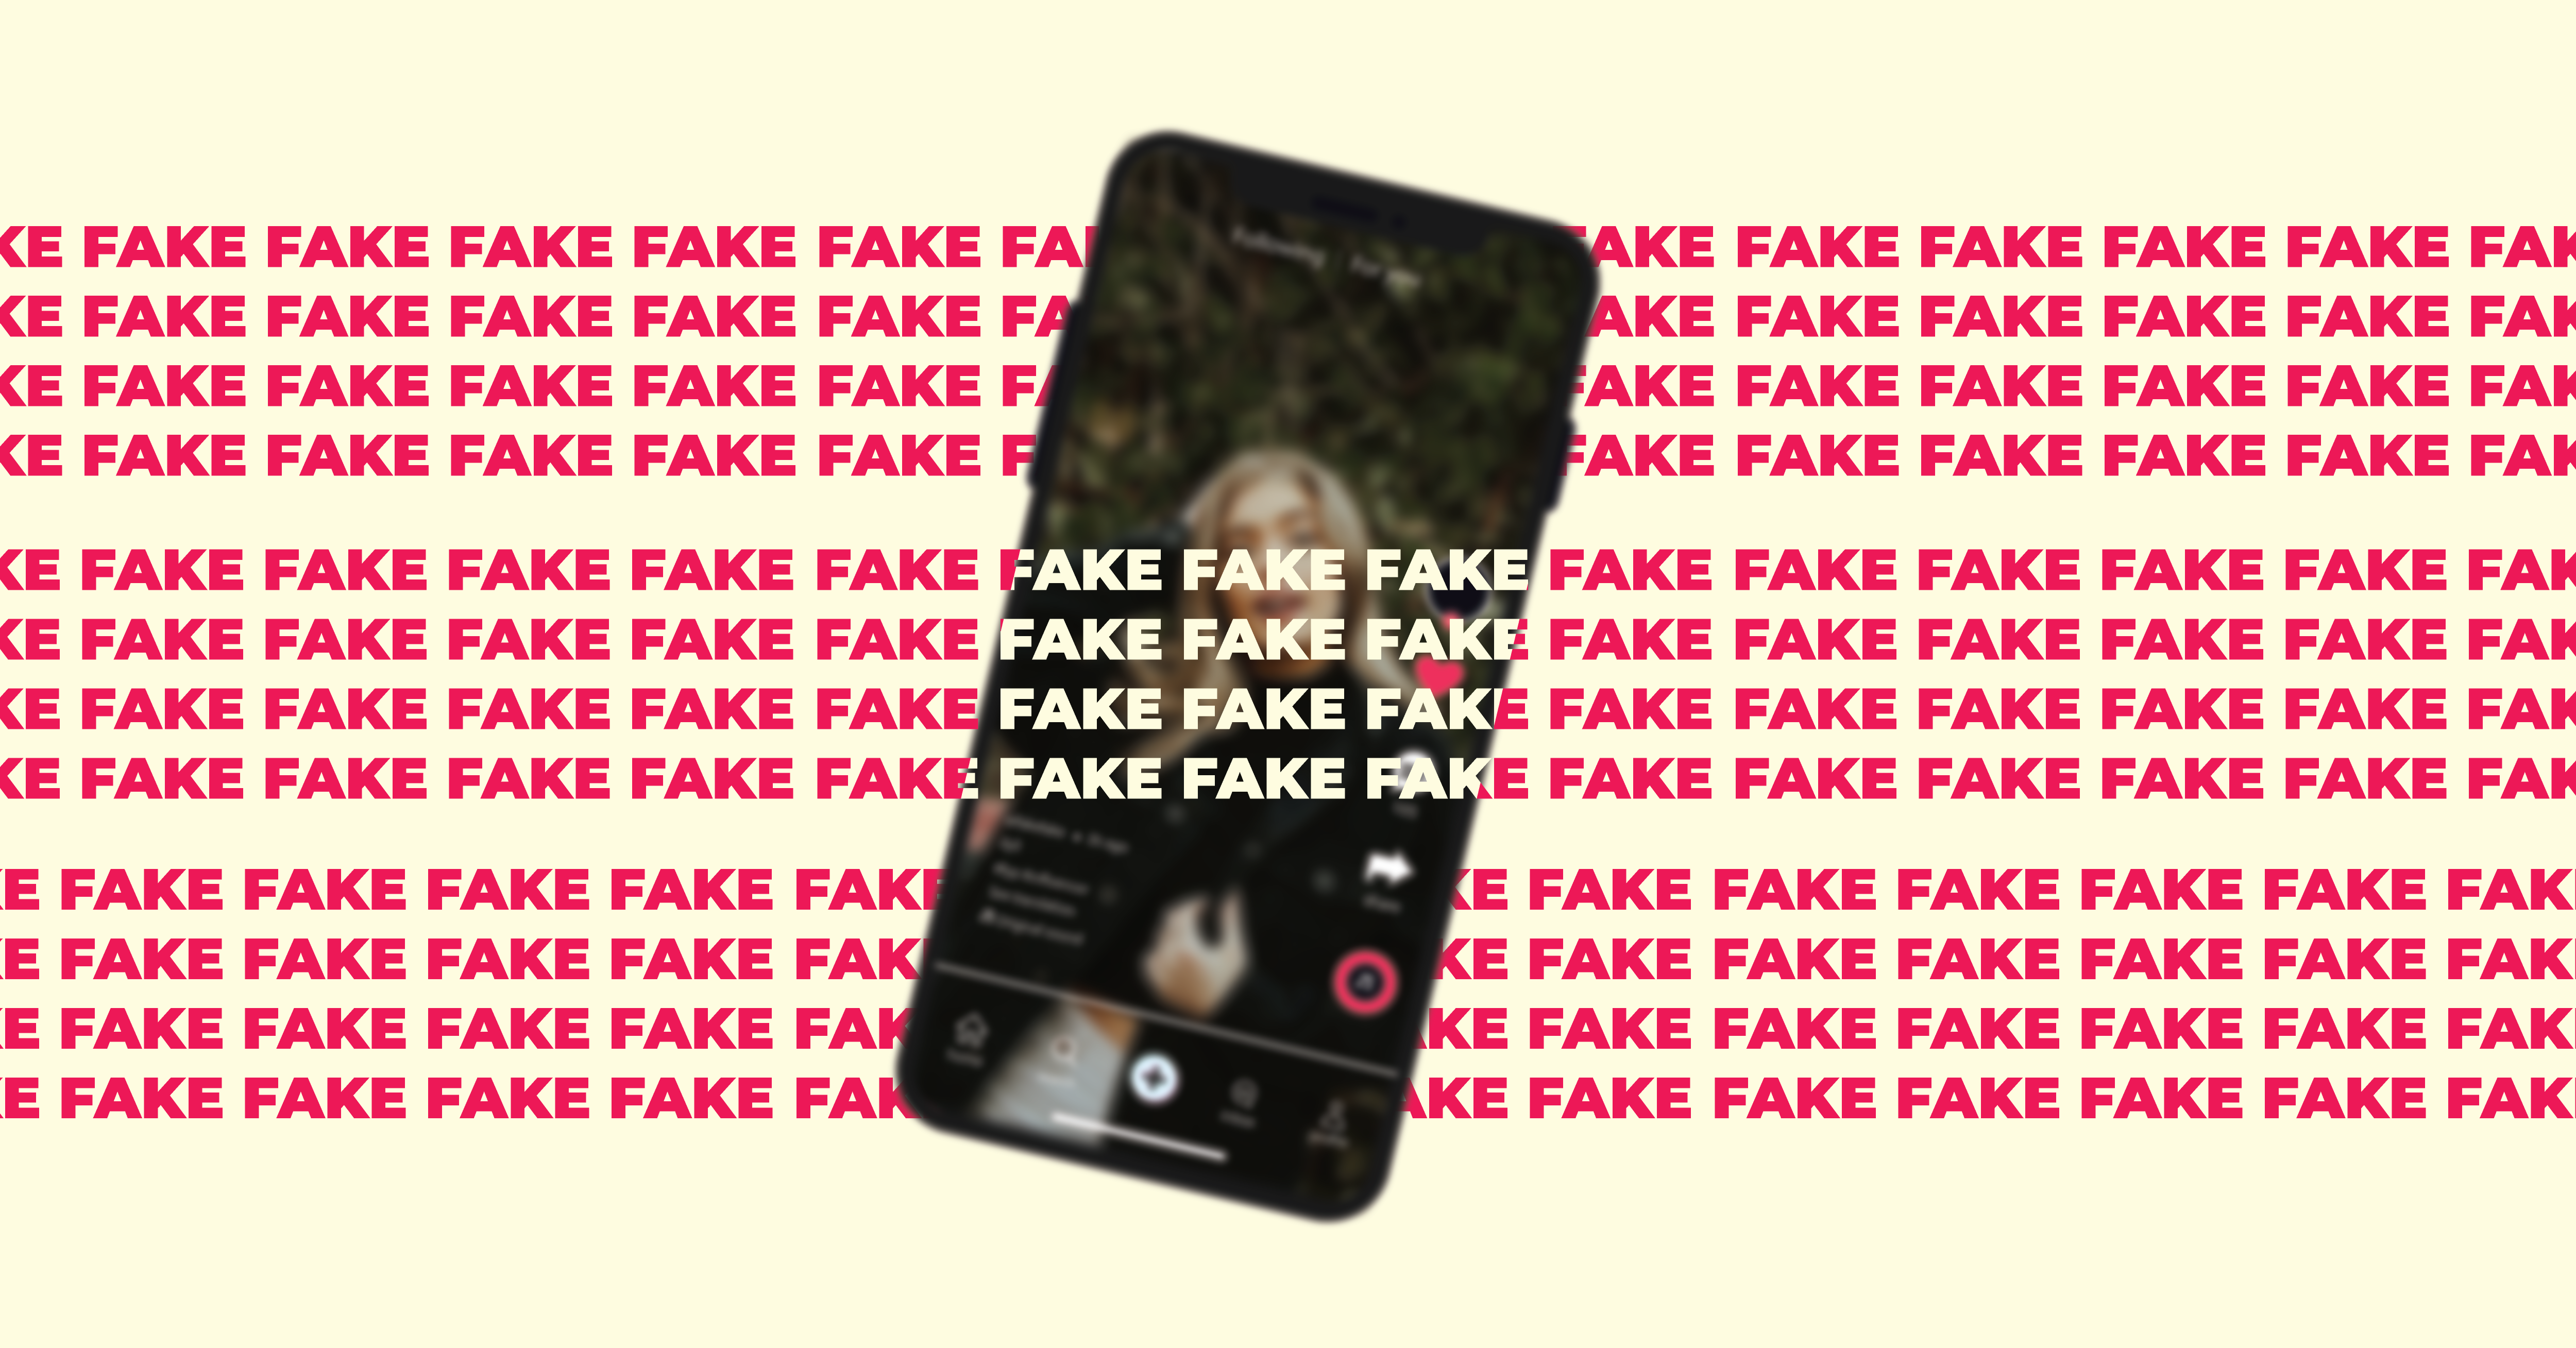 How To Create a Fake TikTok Profile